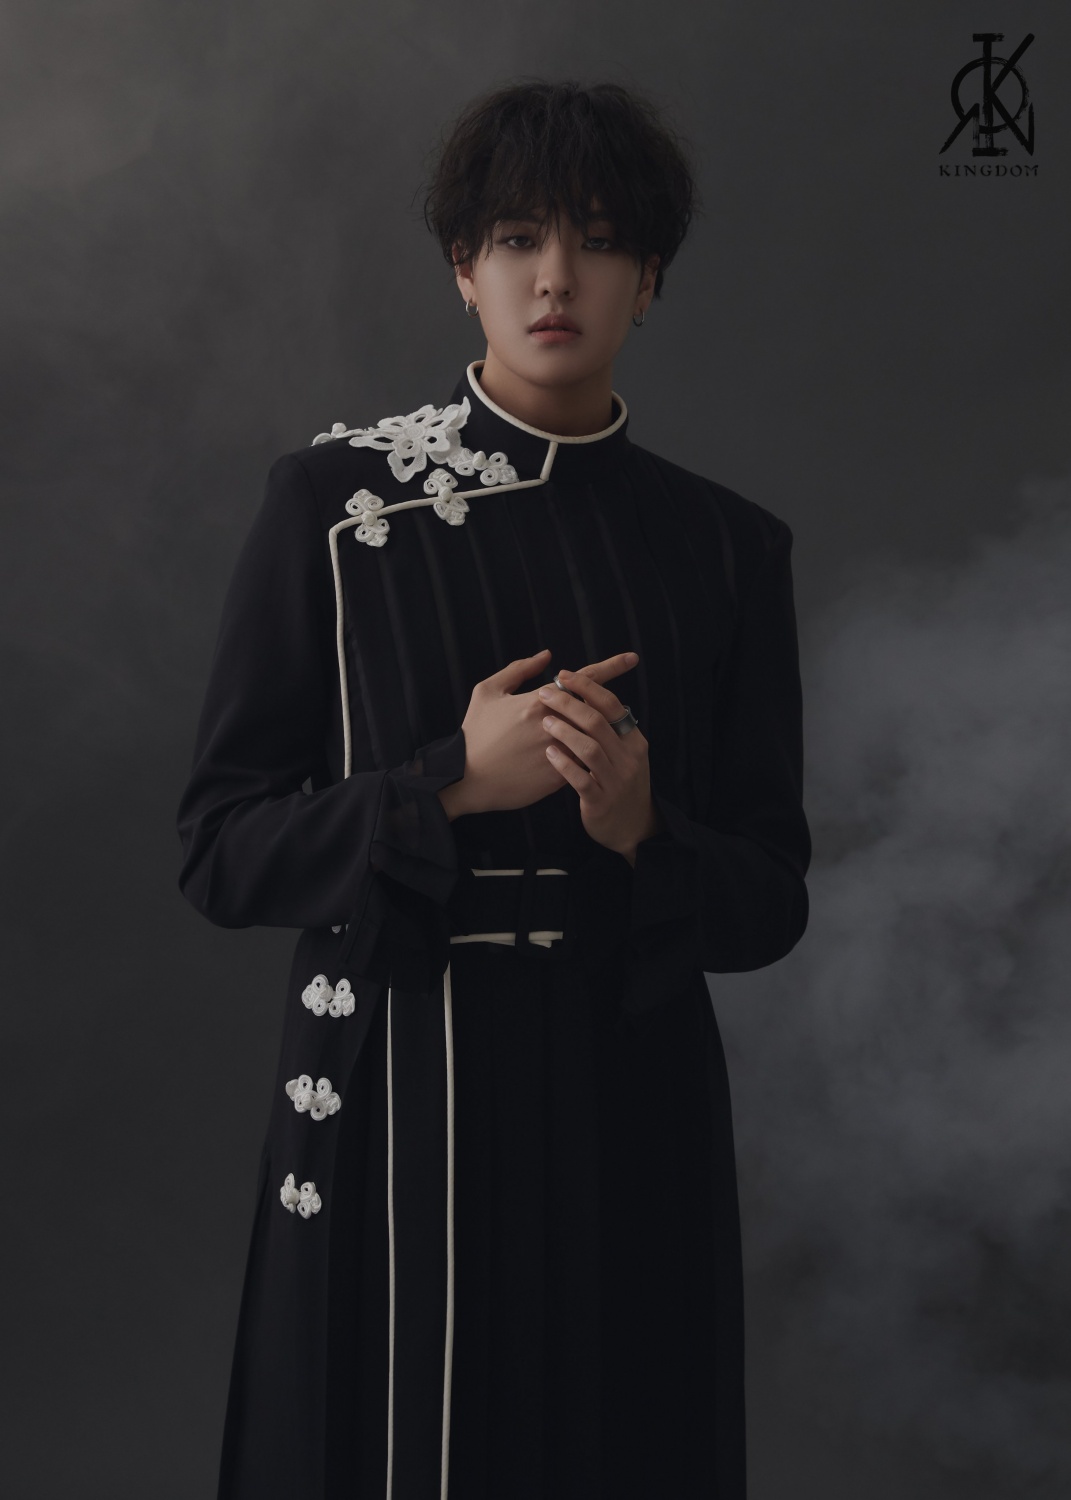 'Fantasy Idol' KINGDOM reveals new concept photo... Long haired Asian boys